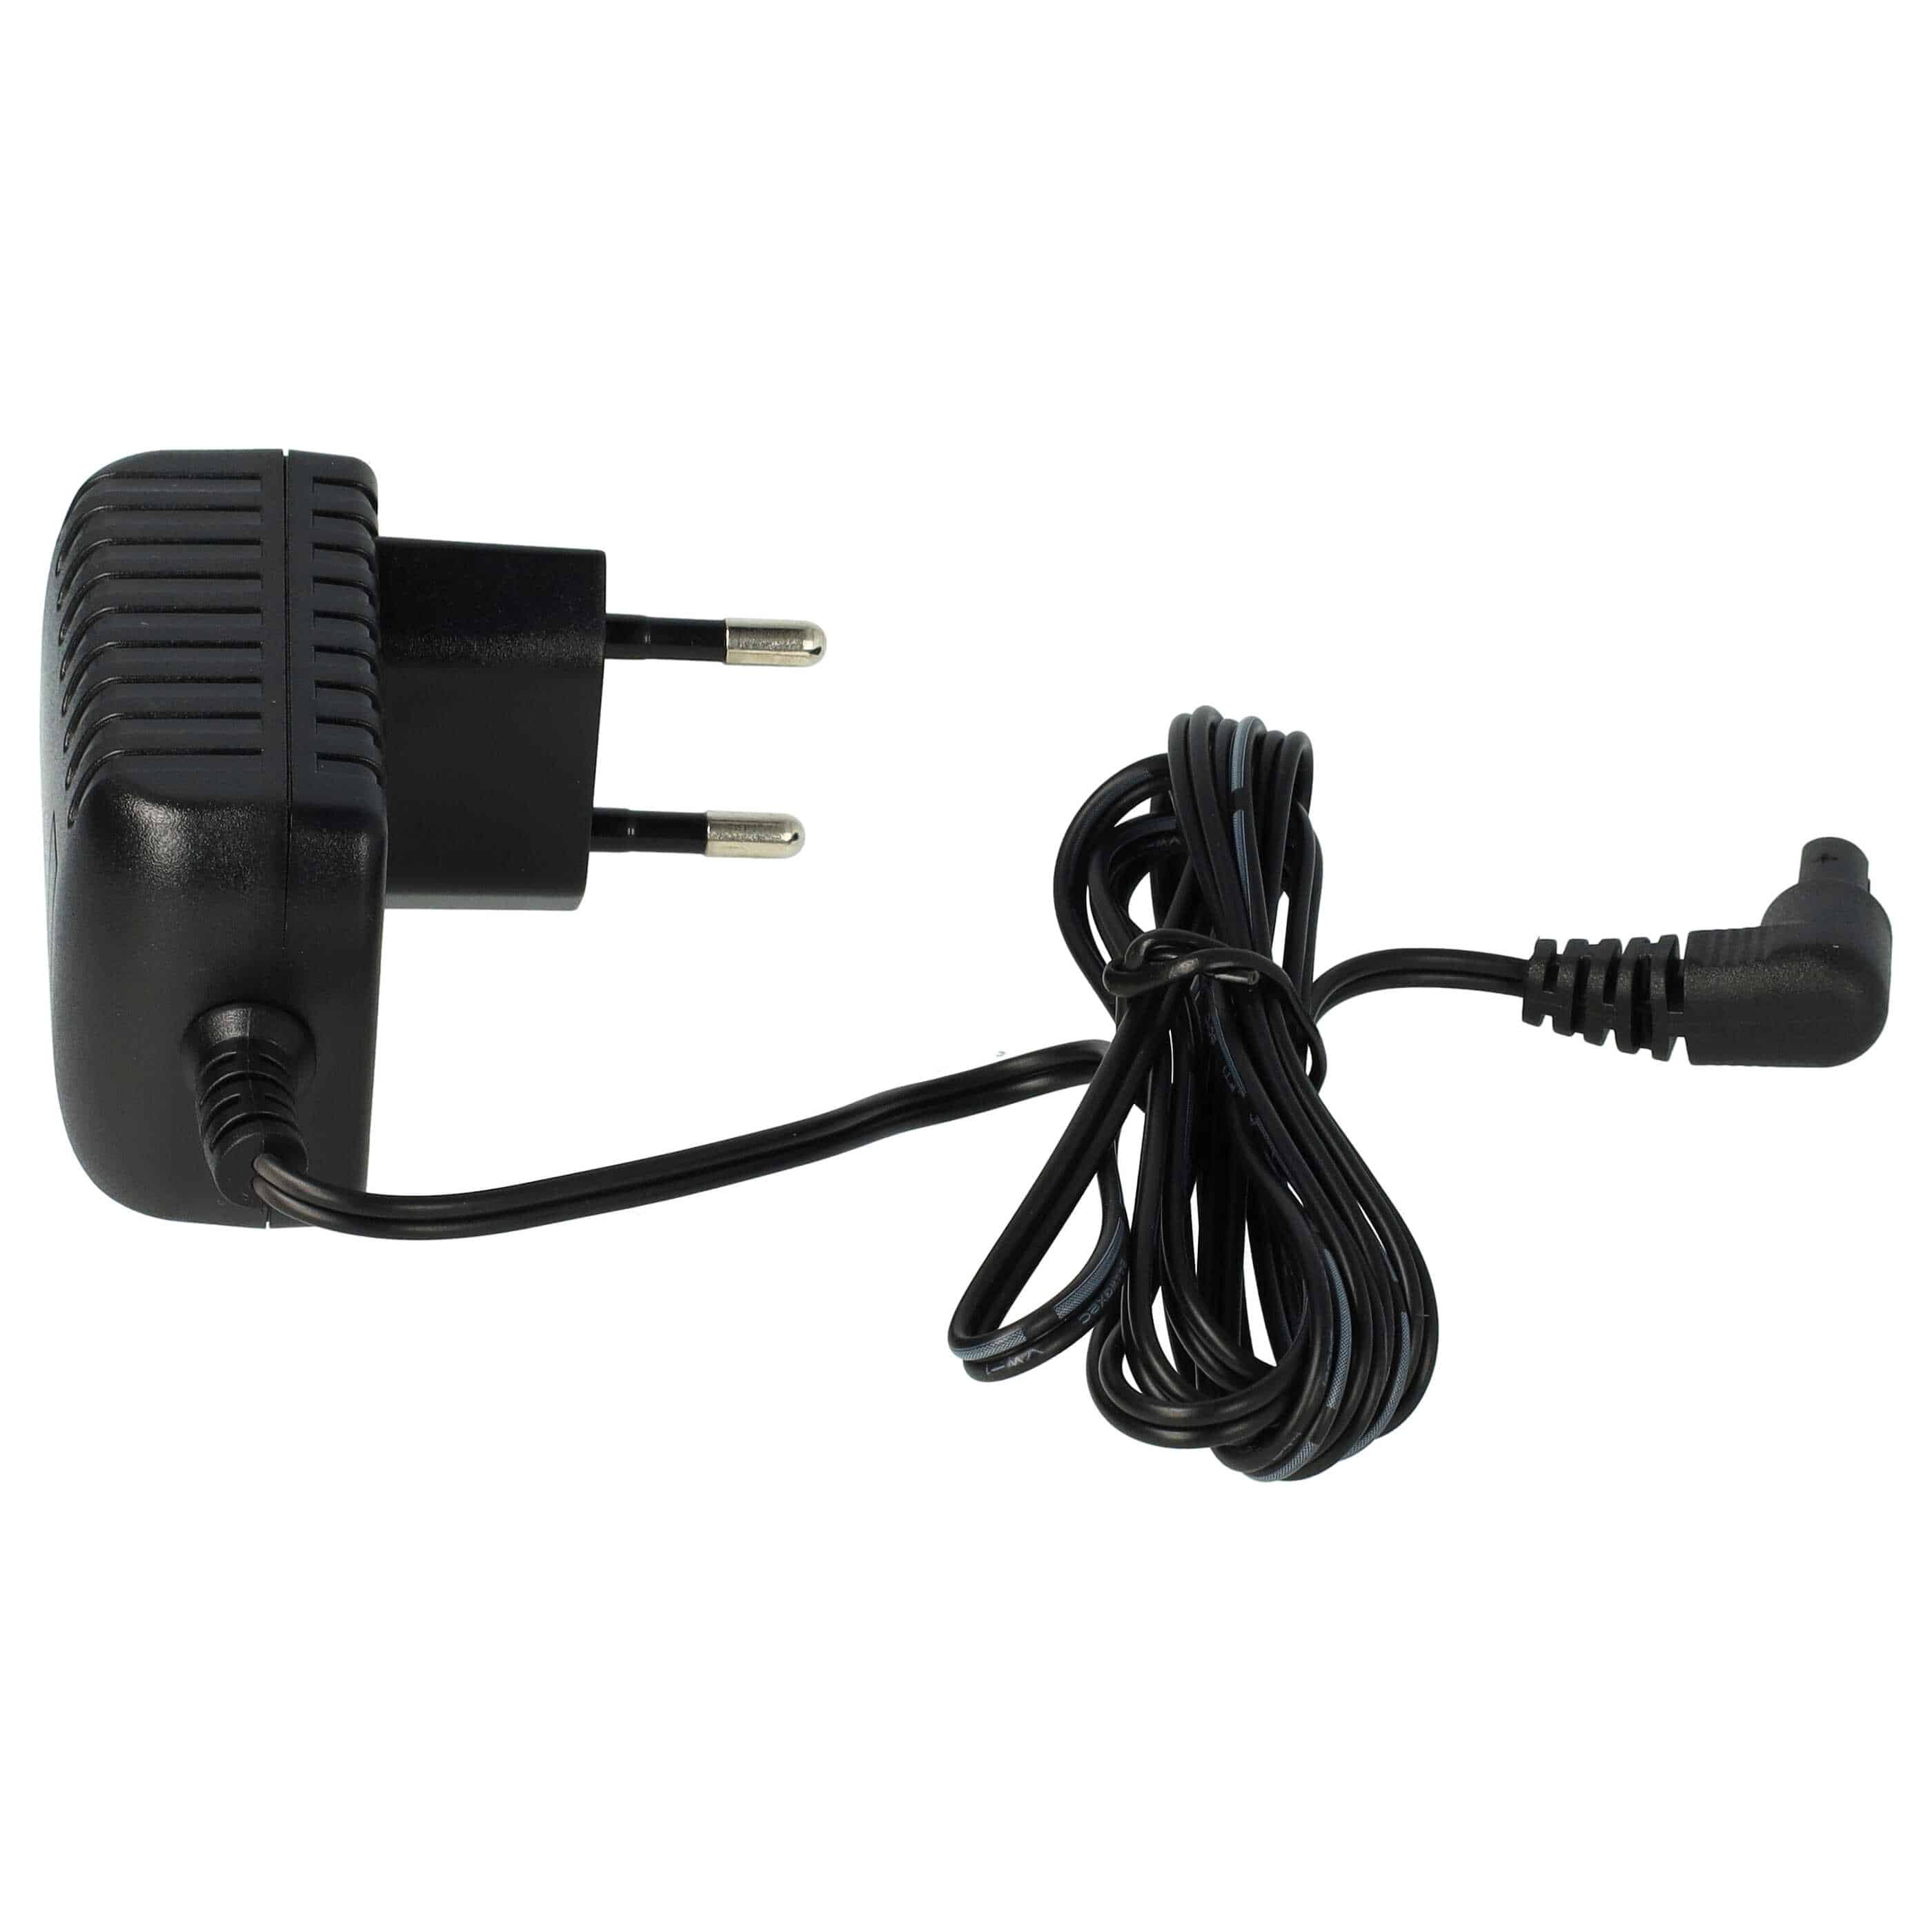 Mains Power Adapter replaces Black & Decker 90545059-01 for Black & Decker Power Tool - 200 cm